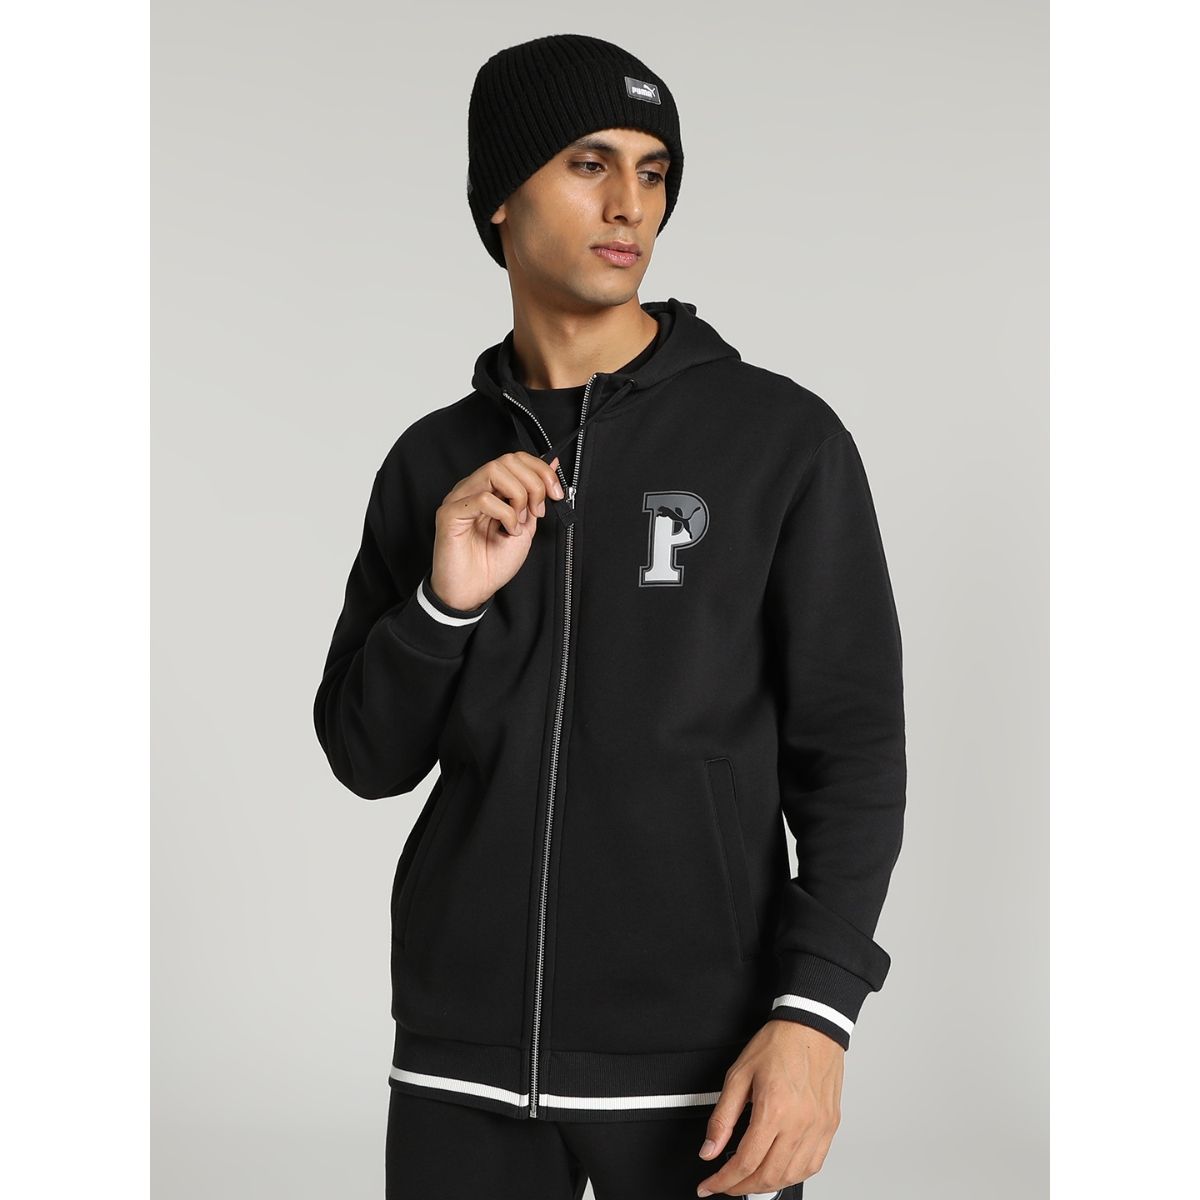 Buy Puma SQUAD Men Black Sweatshirt Online